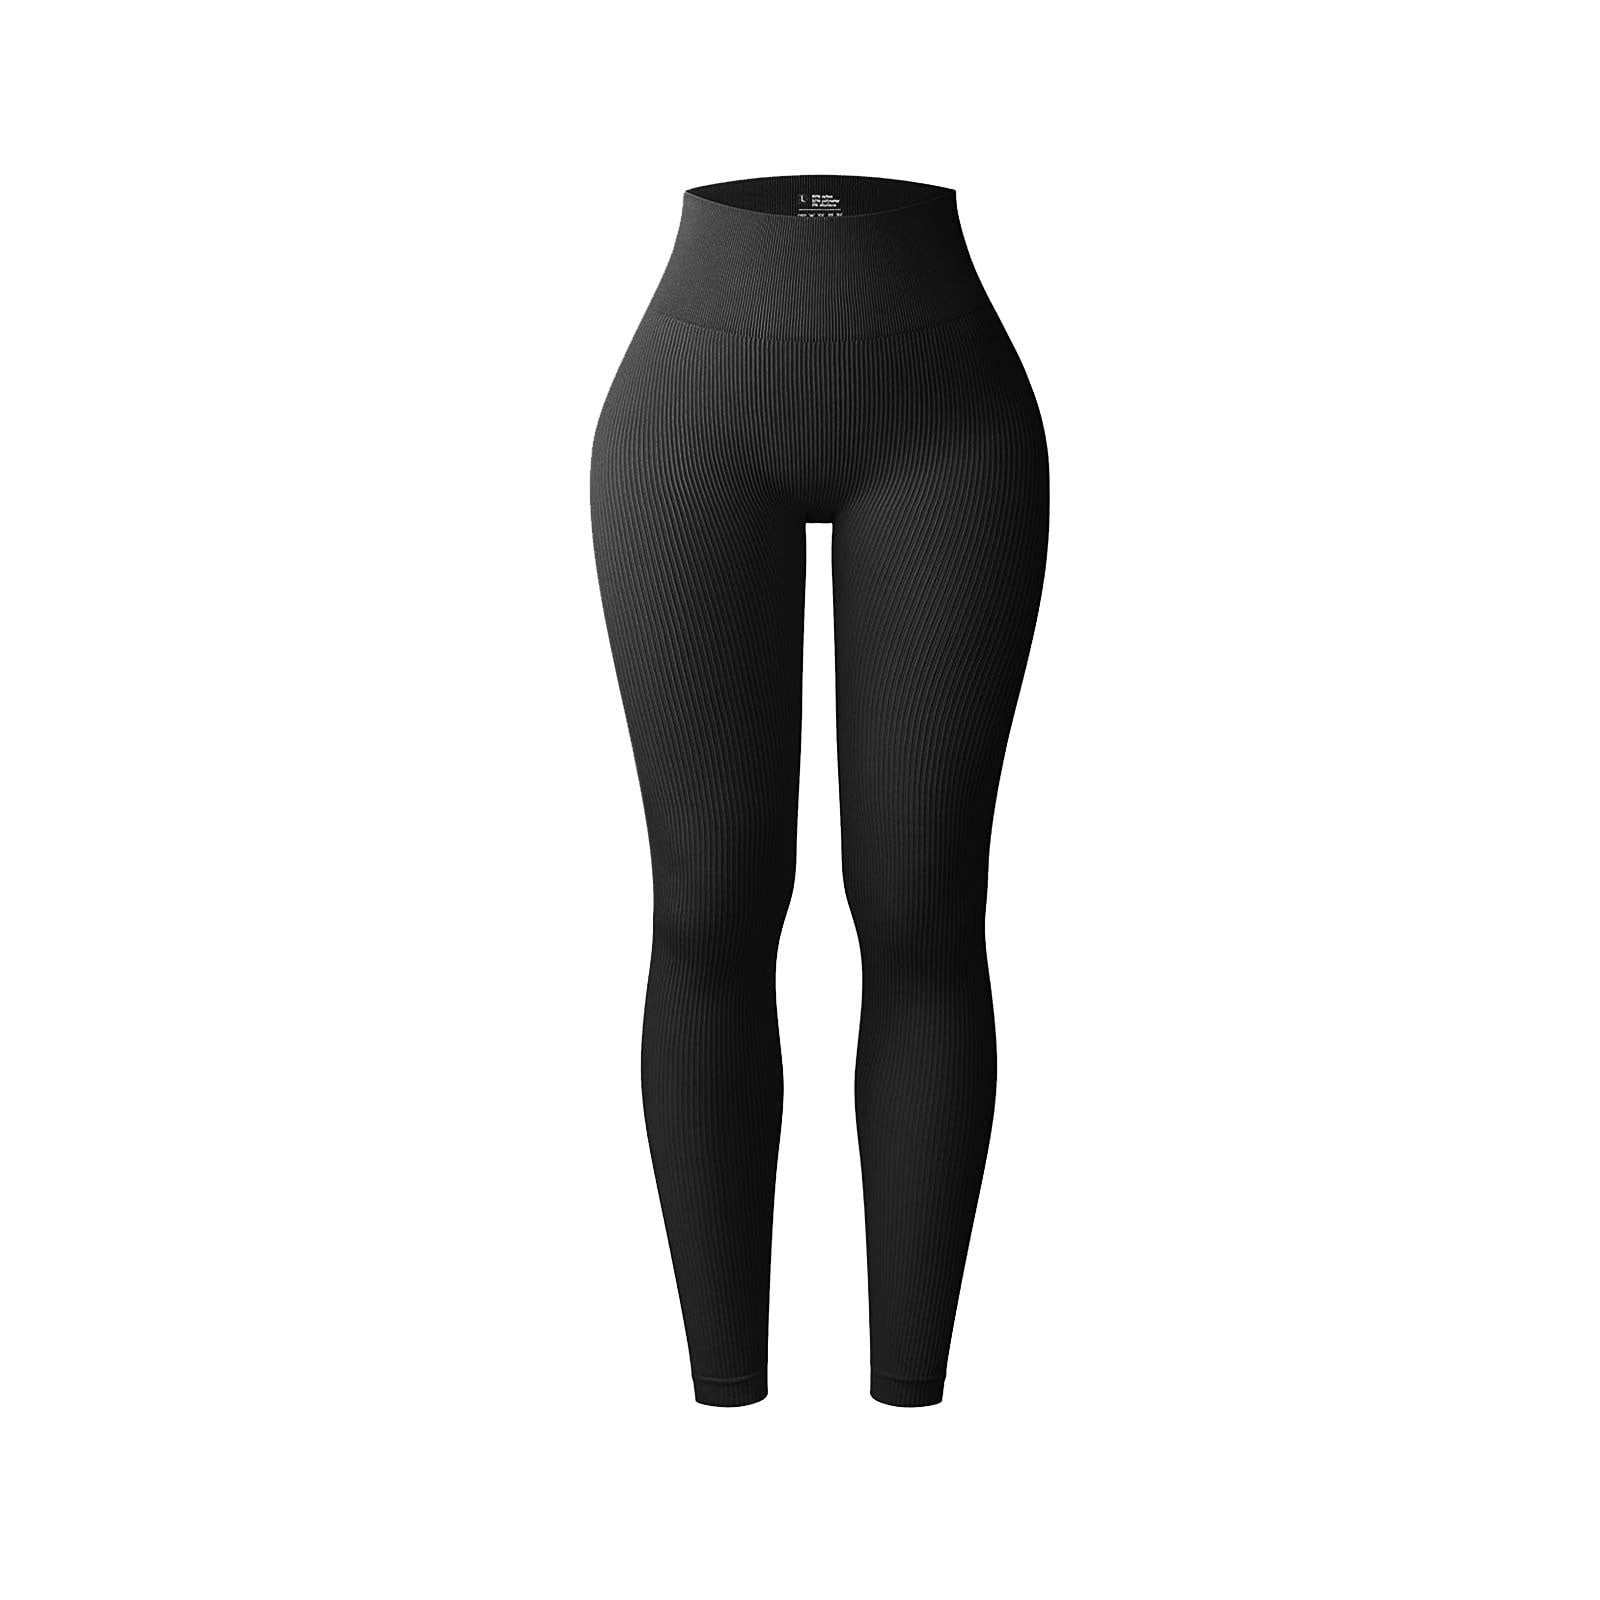 Lovskoo Scrunch Butt Lift Leggings for Women Workout Yoga Pants